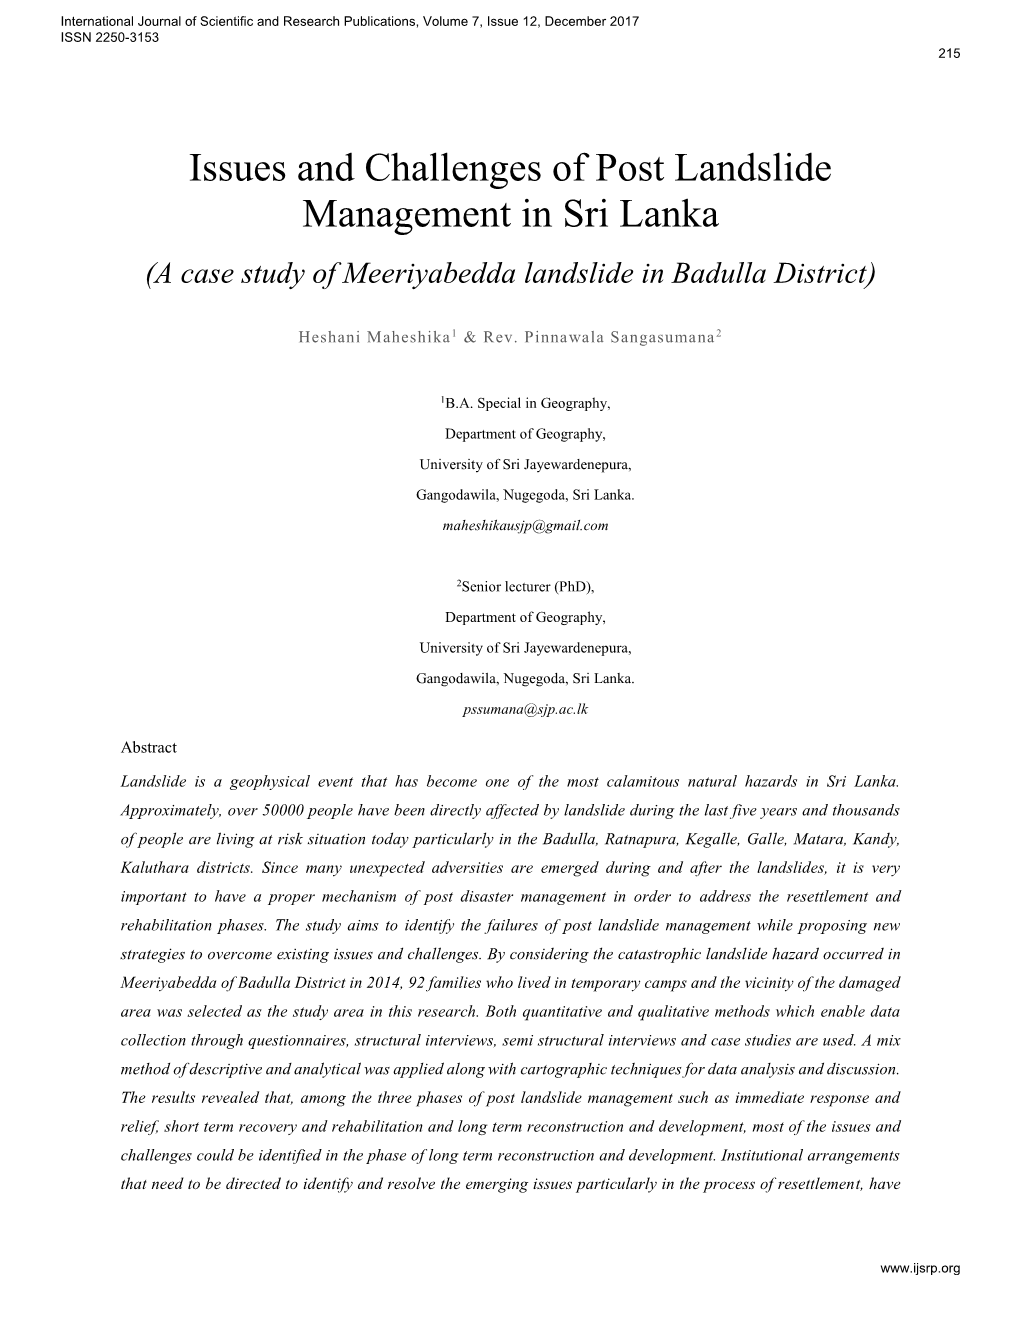 Issues and Challenges of Post Landslide Management in Sri Lanka (A Case Study of Meeriyabedda Landslide in Badulla District)